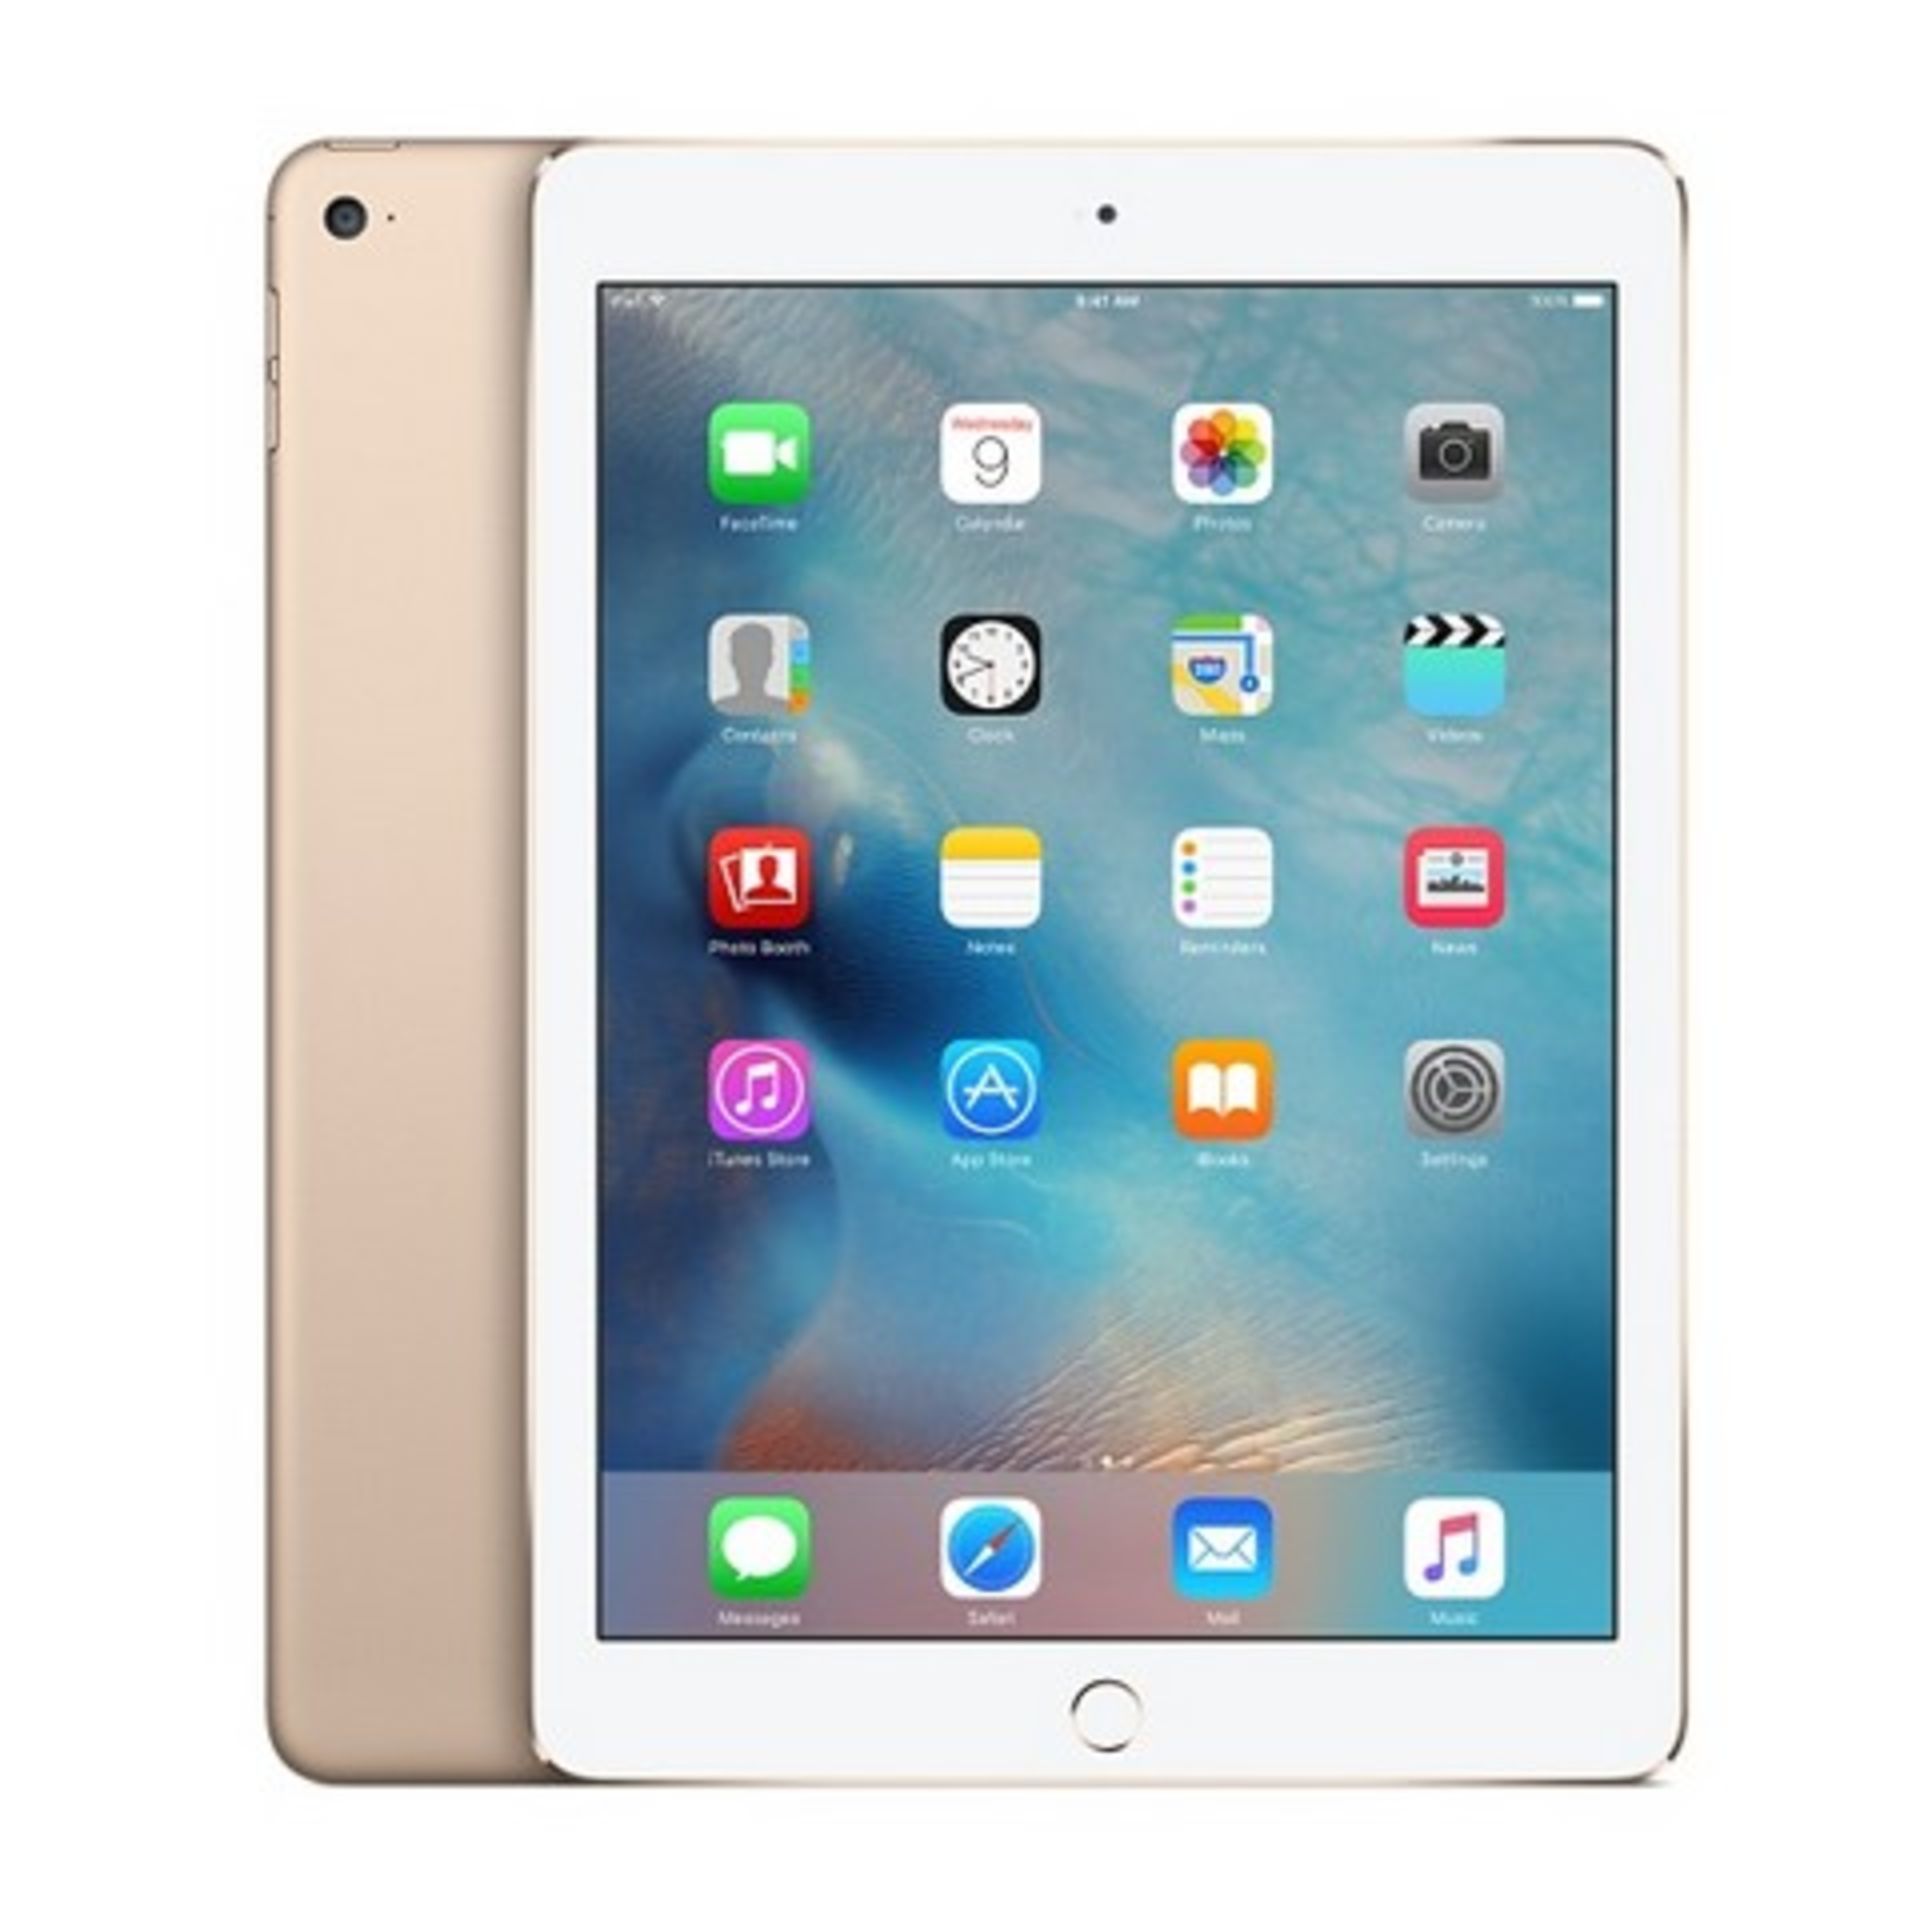 V Grade A Apple iPad Air 2 16GB Gold - Wi-Fi - Box and Accessories